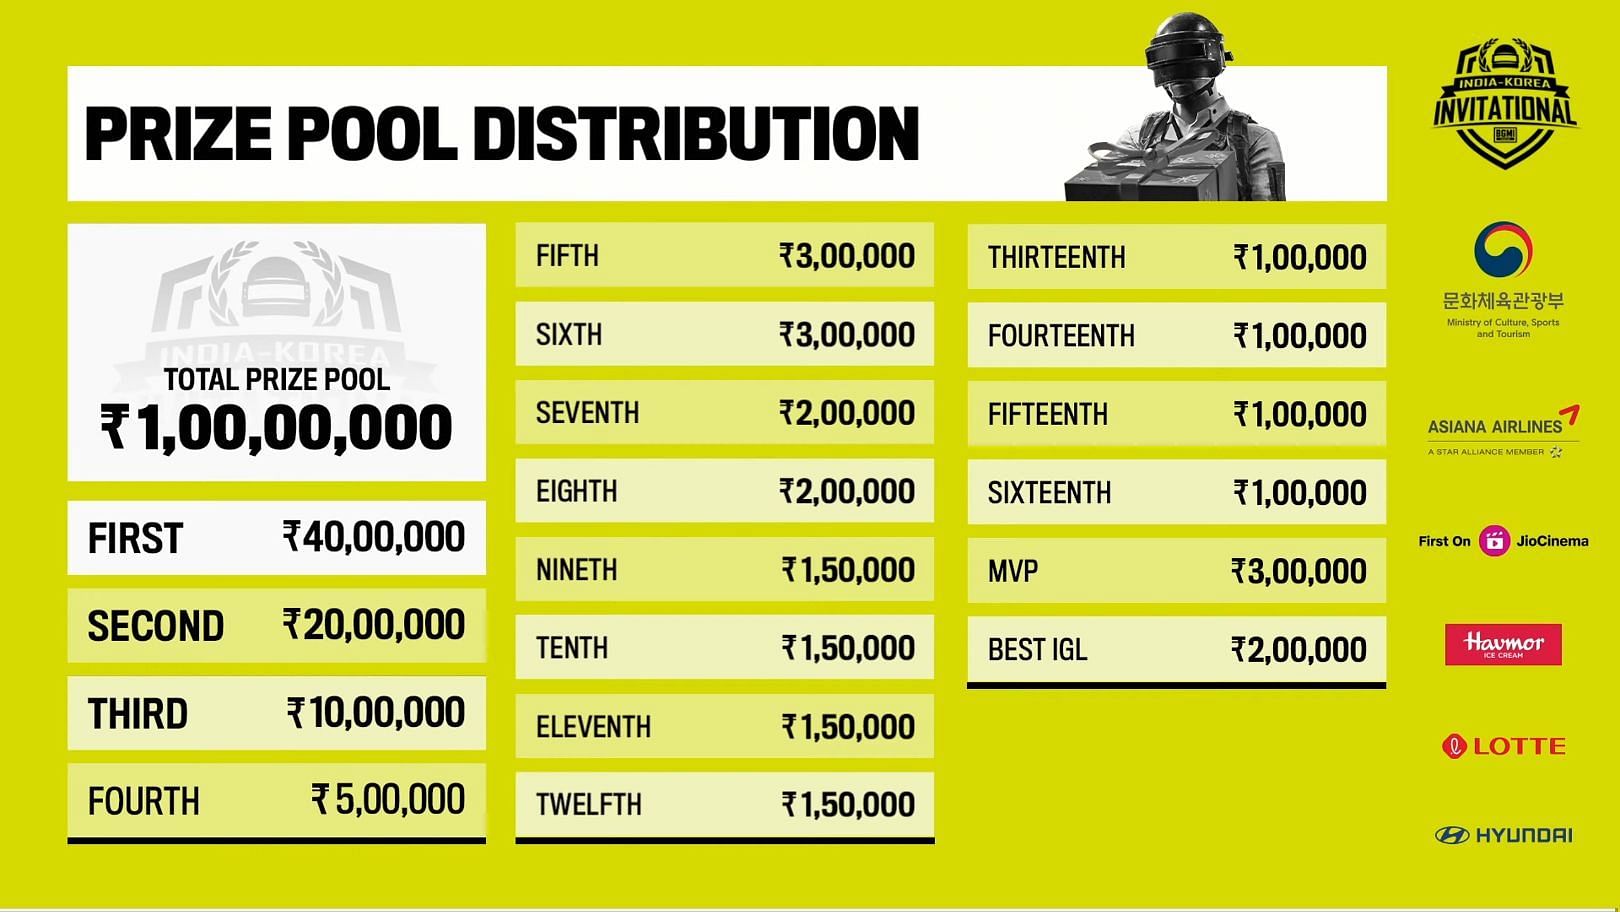 India vs Korea Invitational prize pool distribution (Image via Krafton)